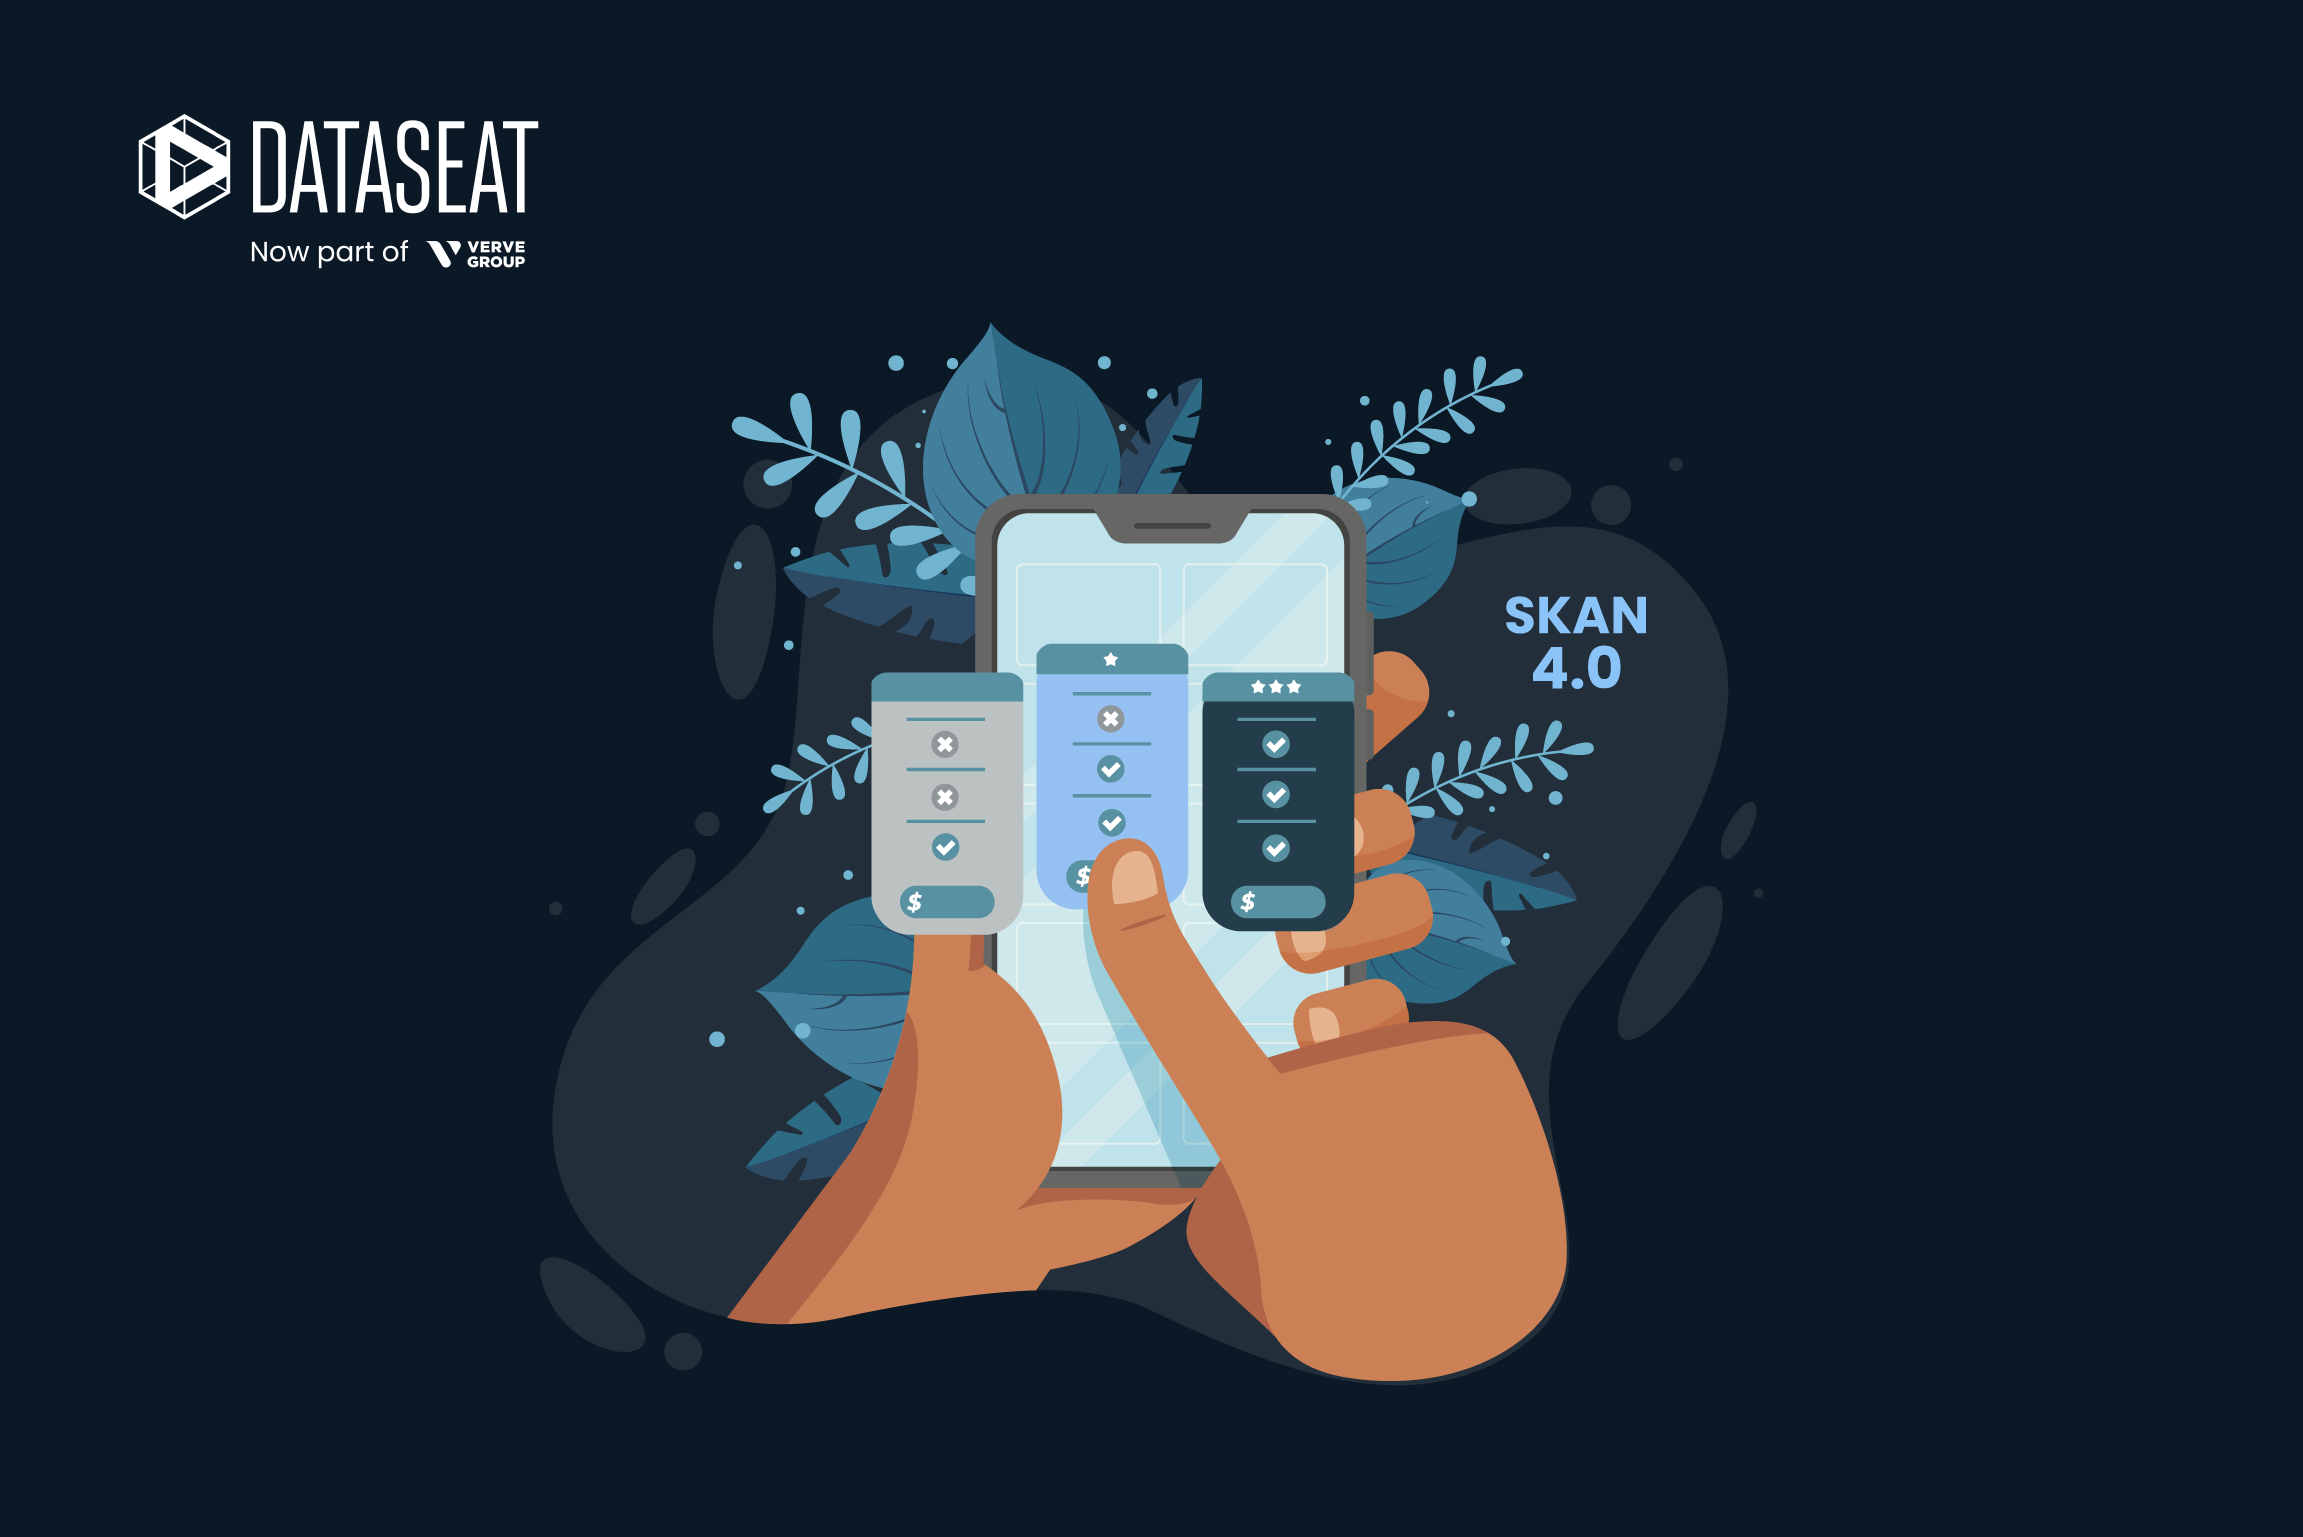 SKAN 4.0 for subscription apps - Dataseat